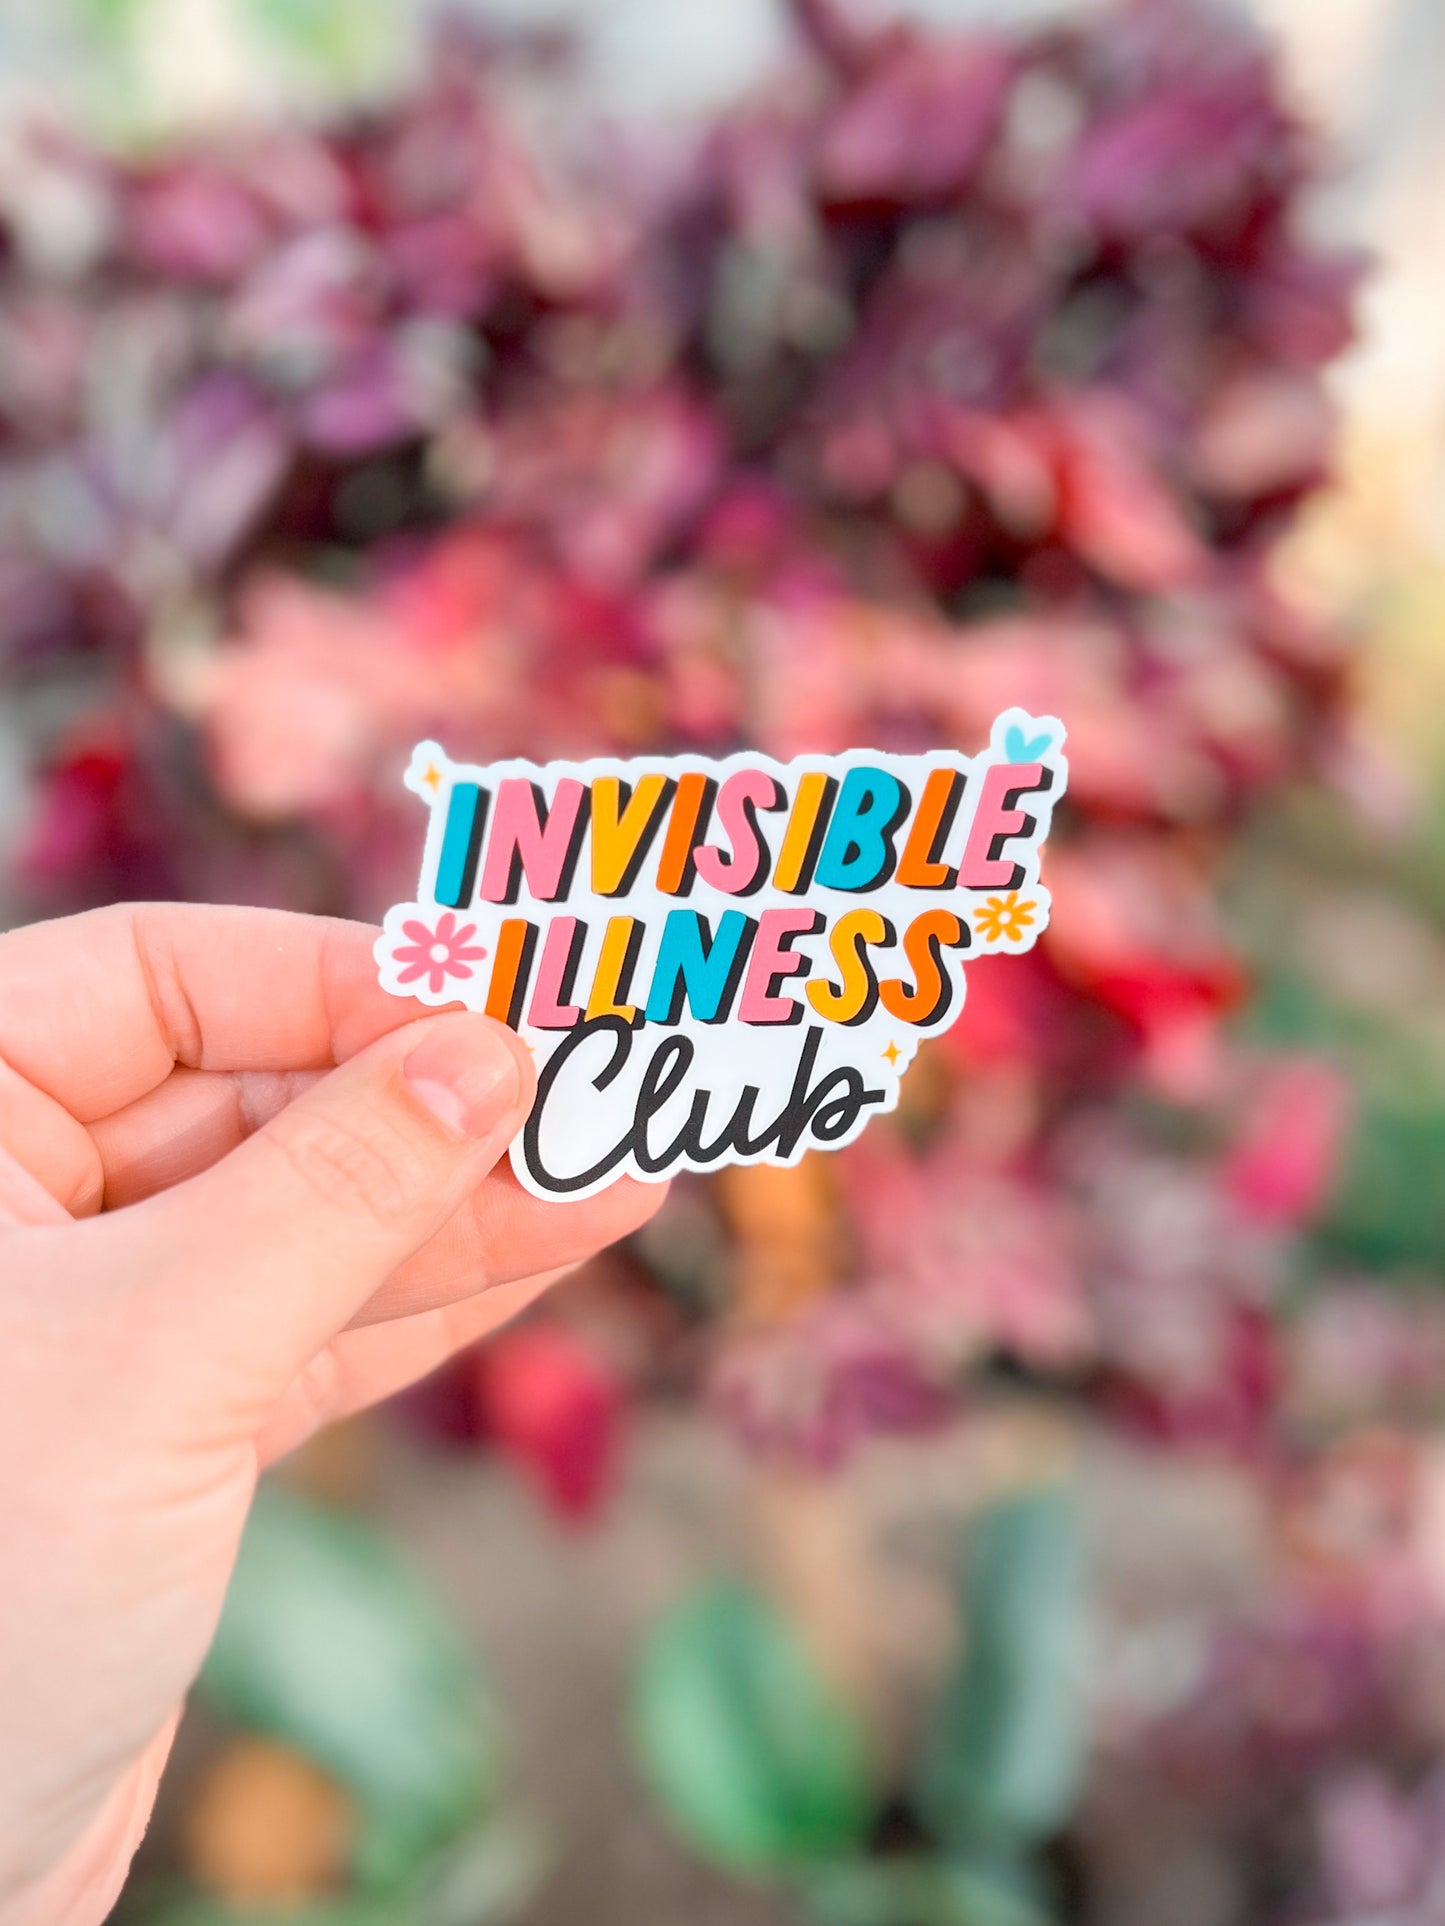 Invisible Illness Club Vinyl Decal